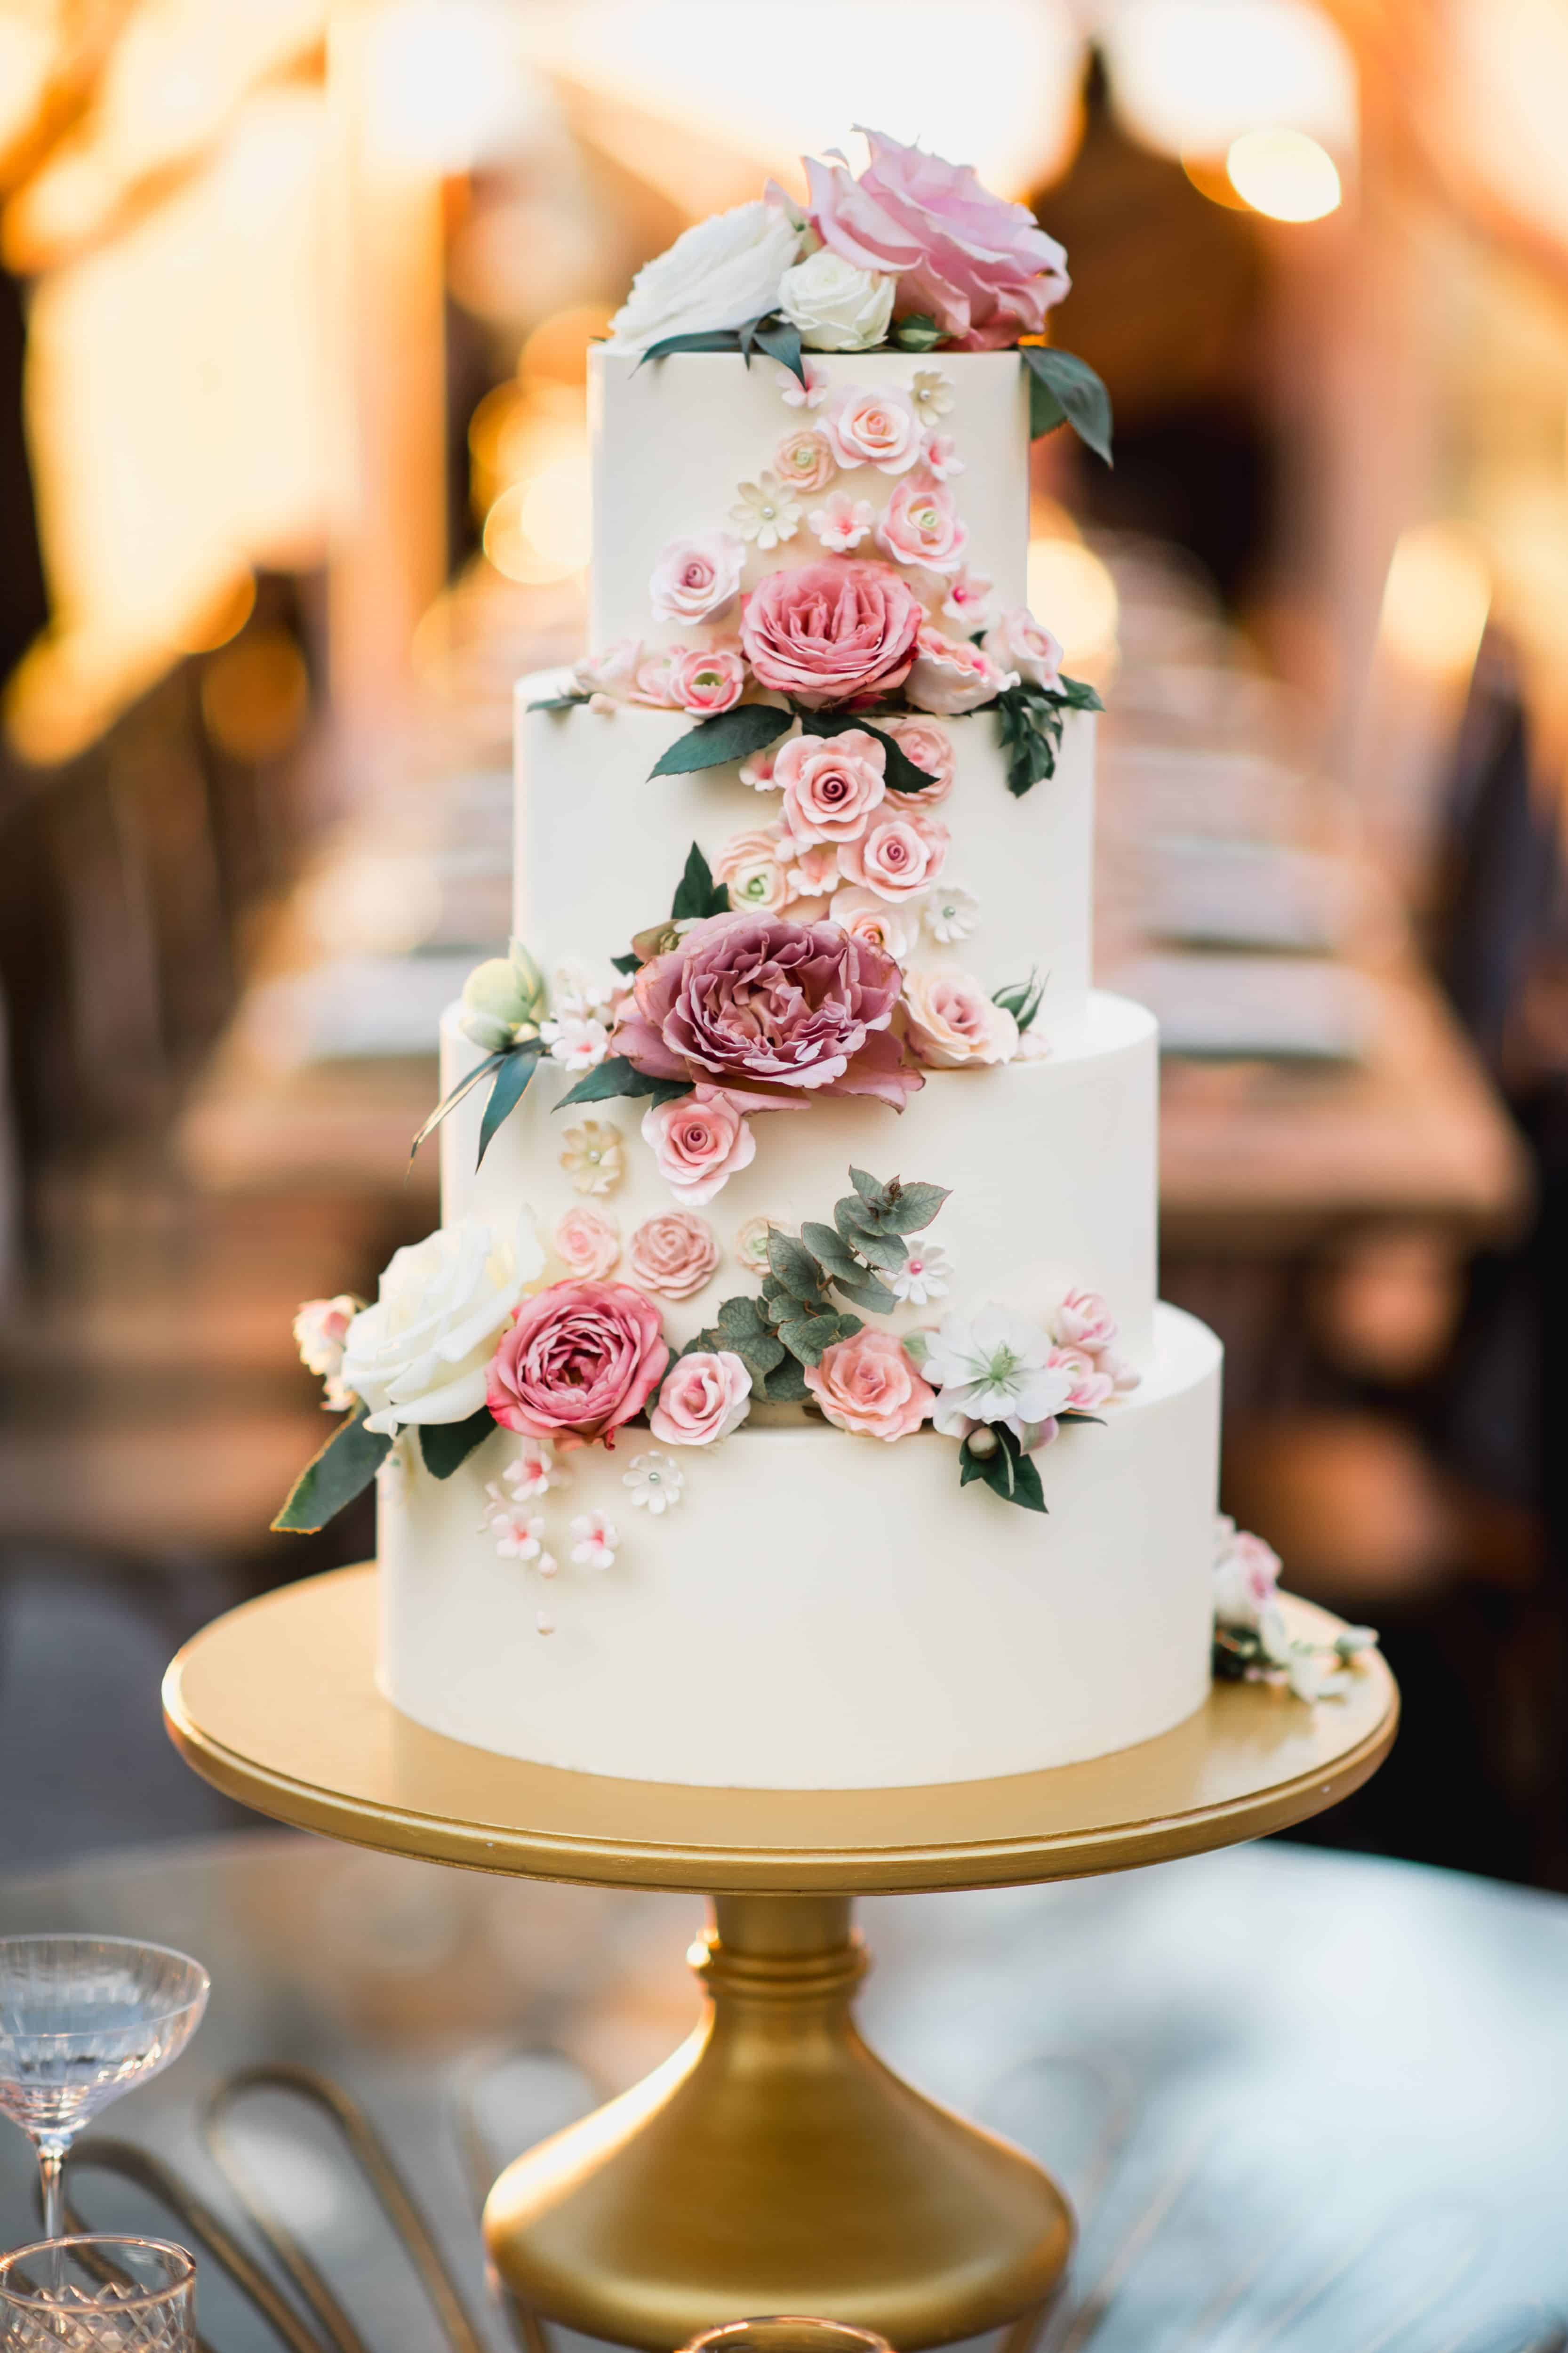 Wedding Cake Wednesday - Give Me Some Sugar (Flowers)